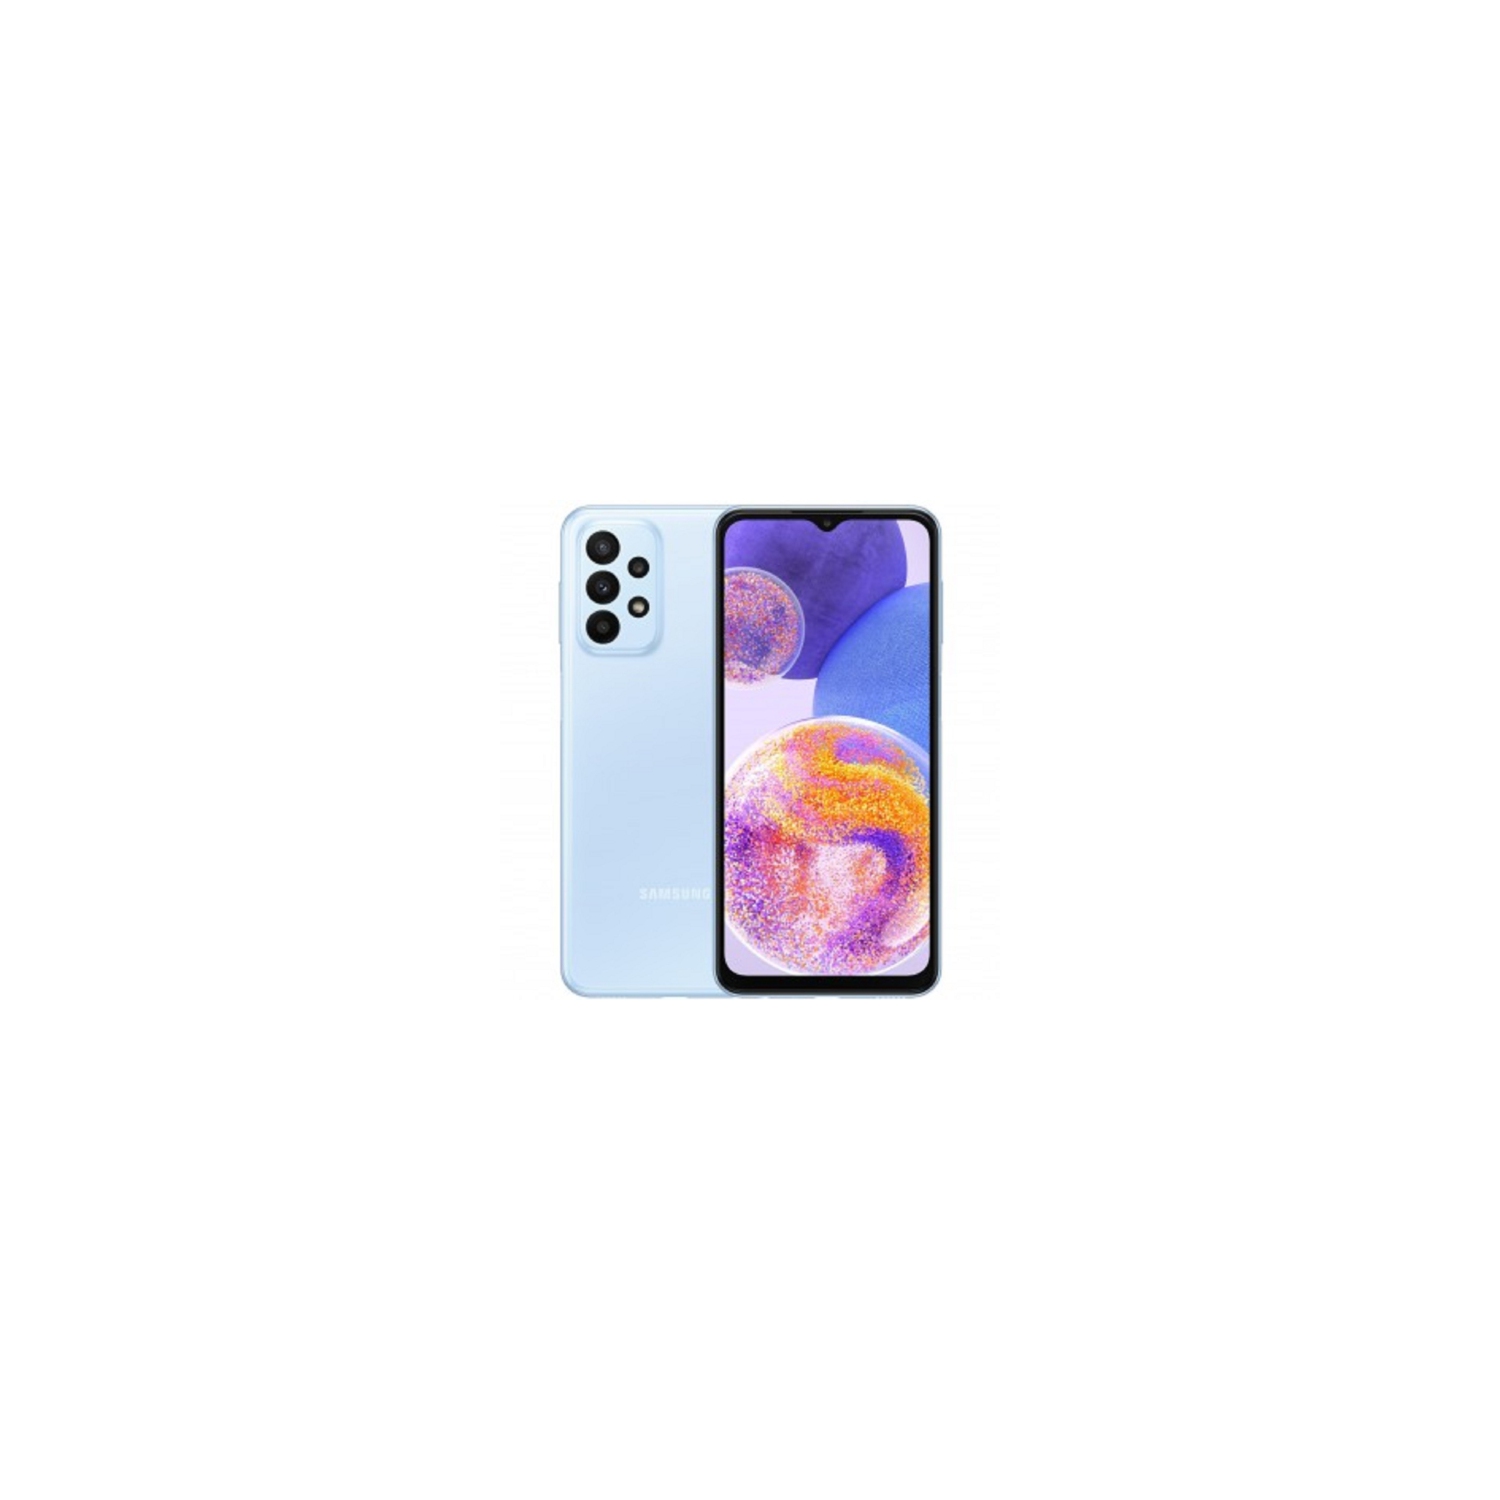 Samsung Galaxy A23 (SM-A235M/DS) 128GB - Unlocked Smartphone - Brand New